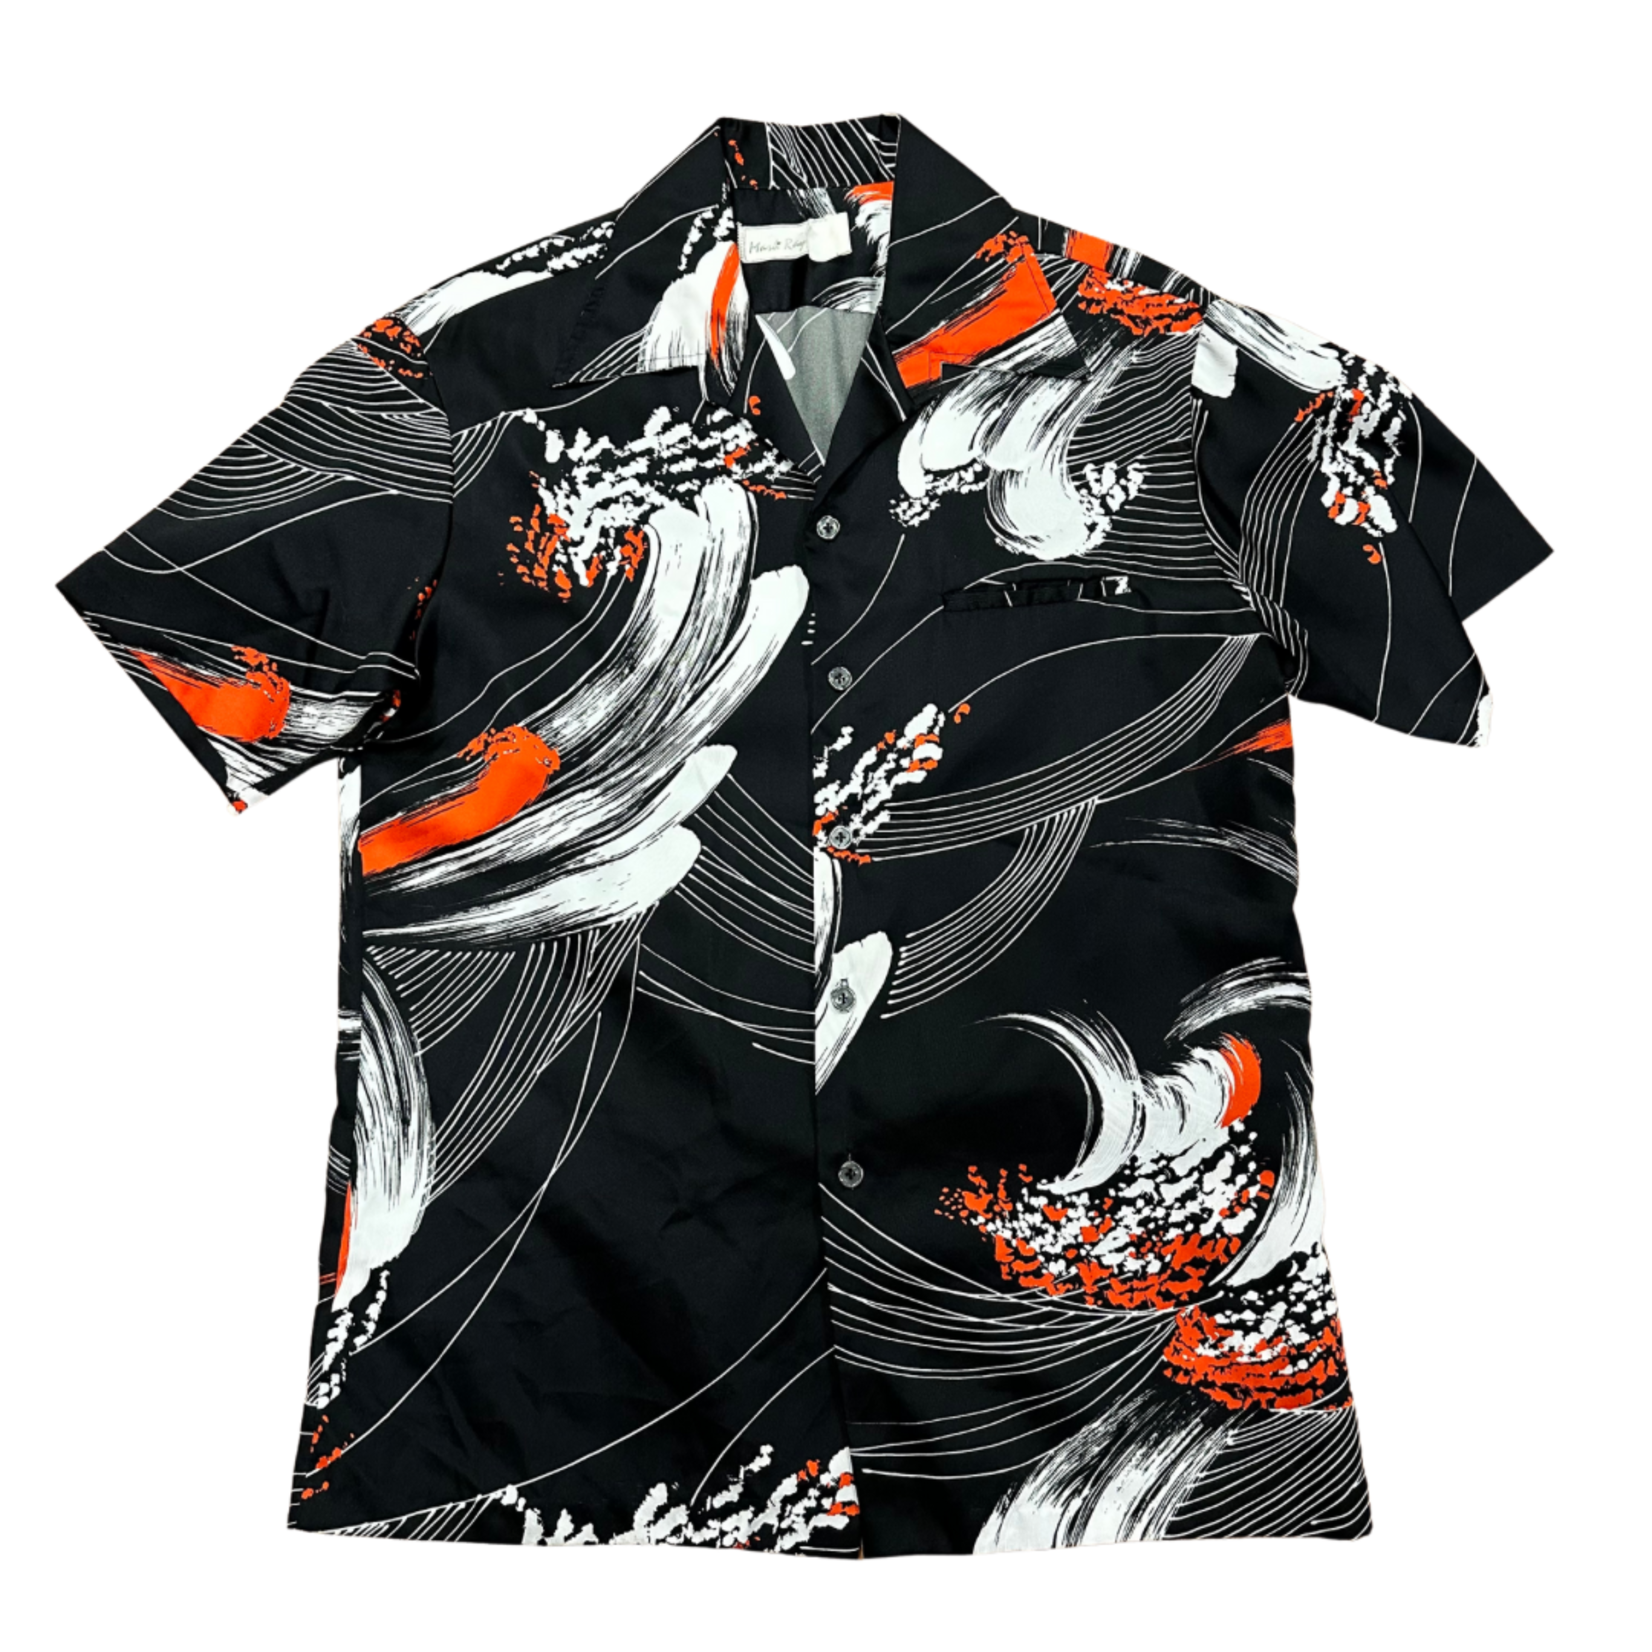 Mission Zero Men’s Vintage Aloha Shirt - Mark Reysten - Red/White/Black Wave Splash  - L